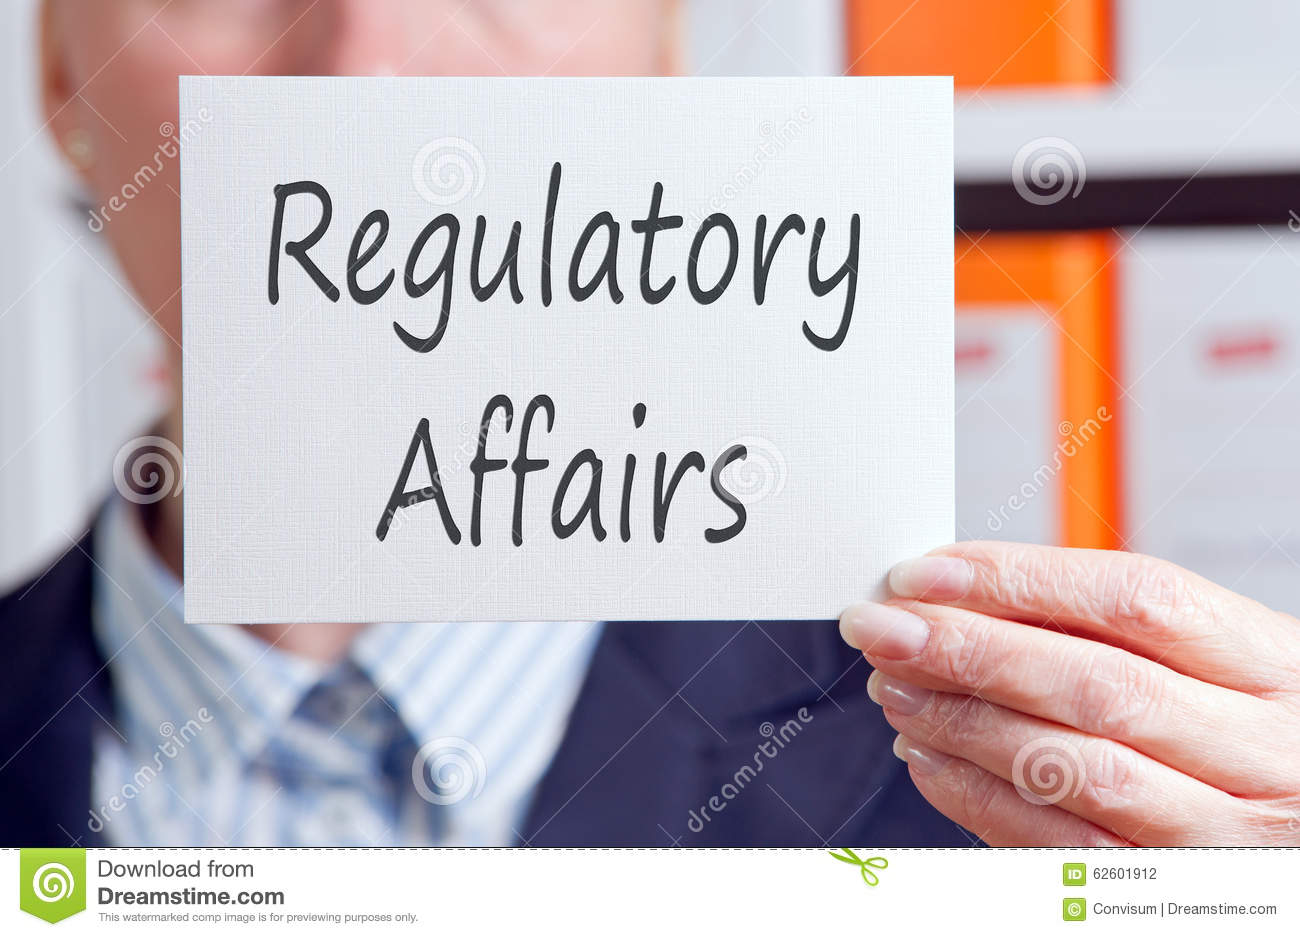 PMD604 & PMD608 (2566) Regulatory affairs and product registration & Advance regulatory affairs